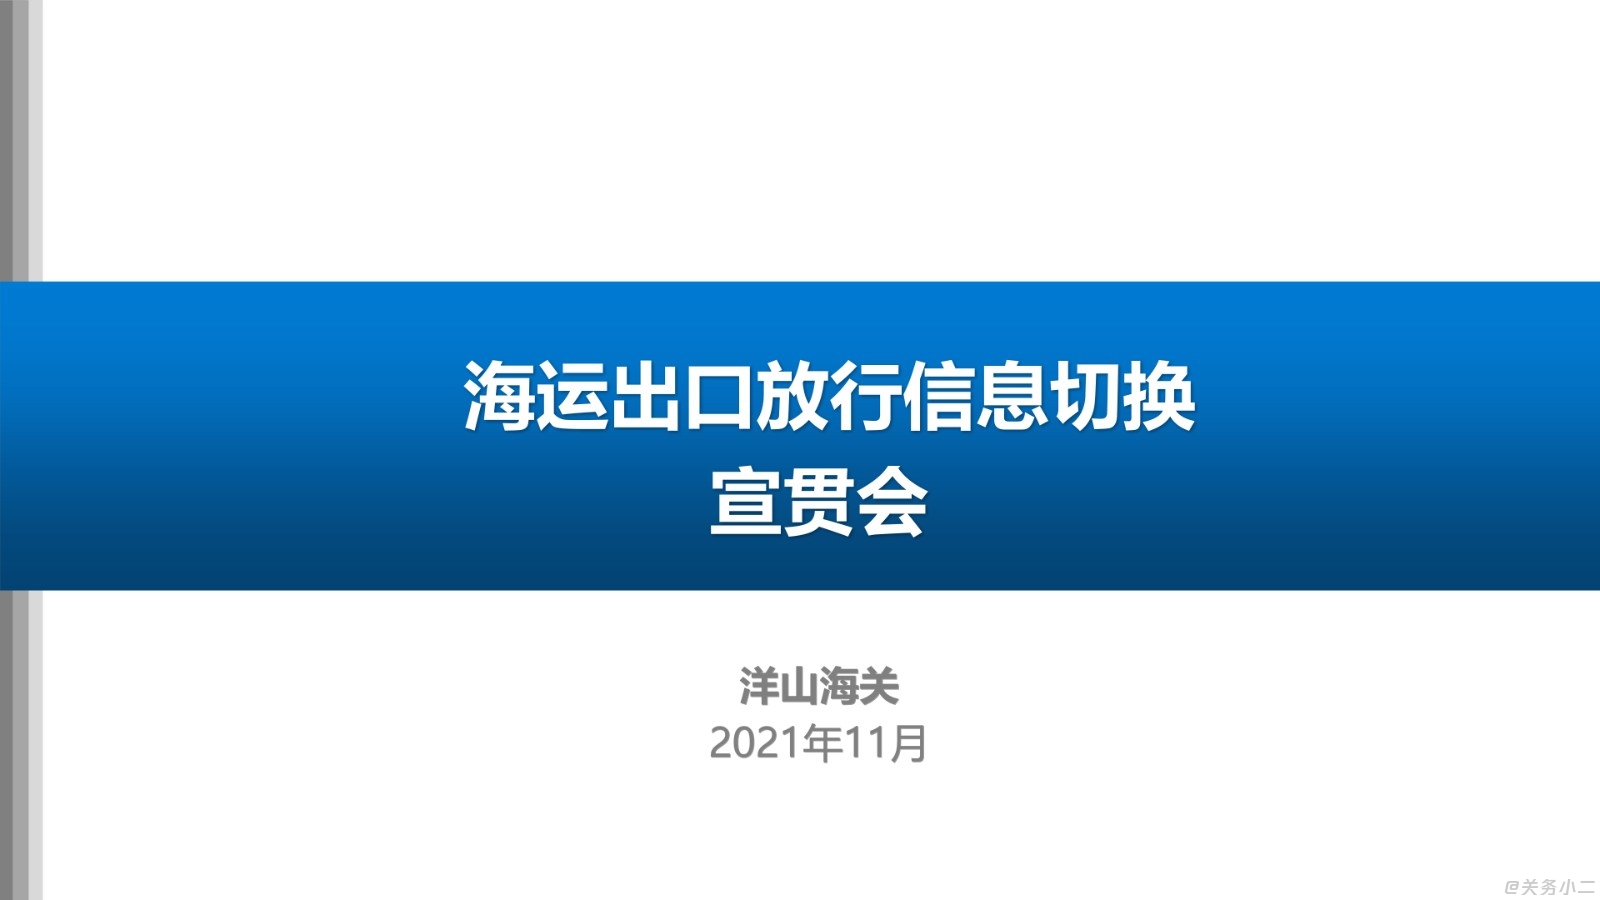 PPT-上海海关海运出口放行信息切换安排宣贯会_1.jpg